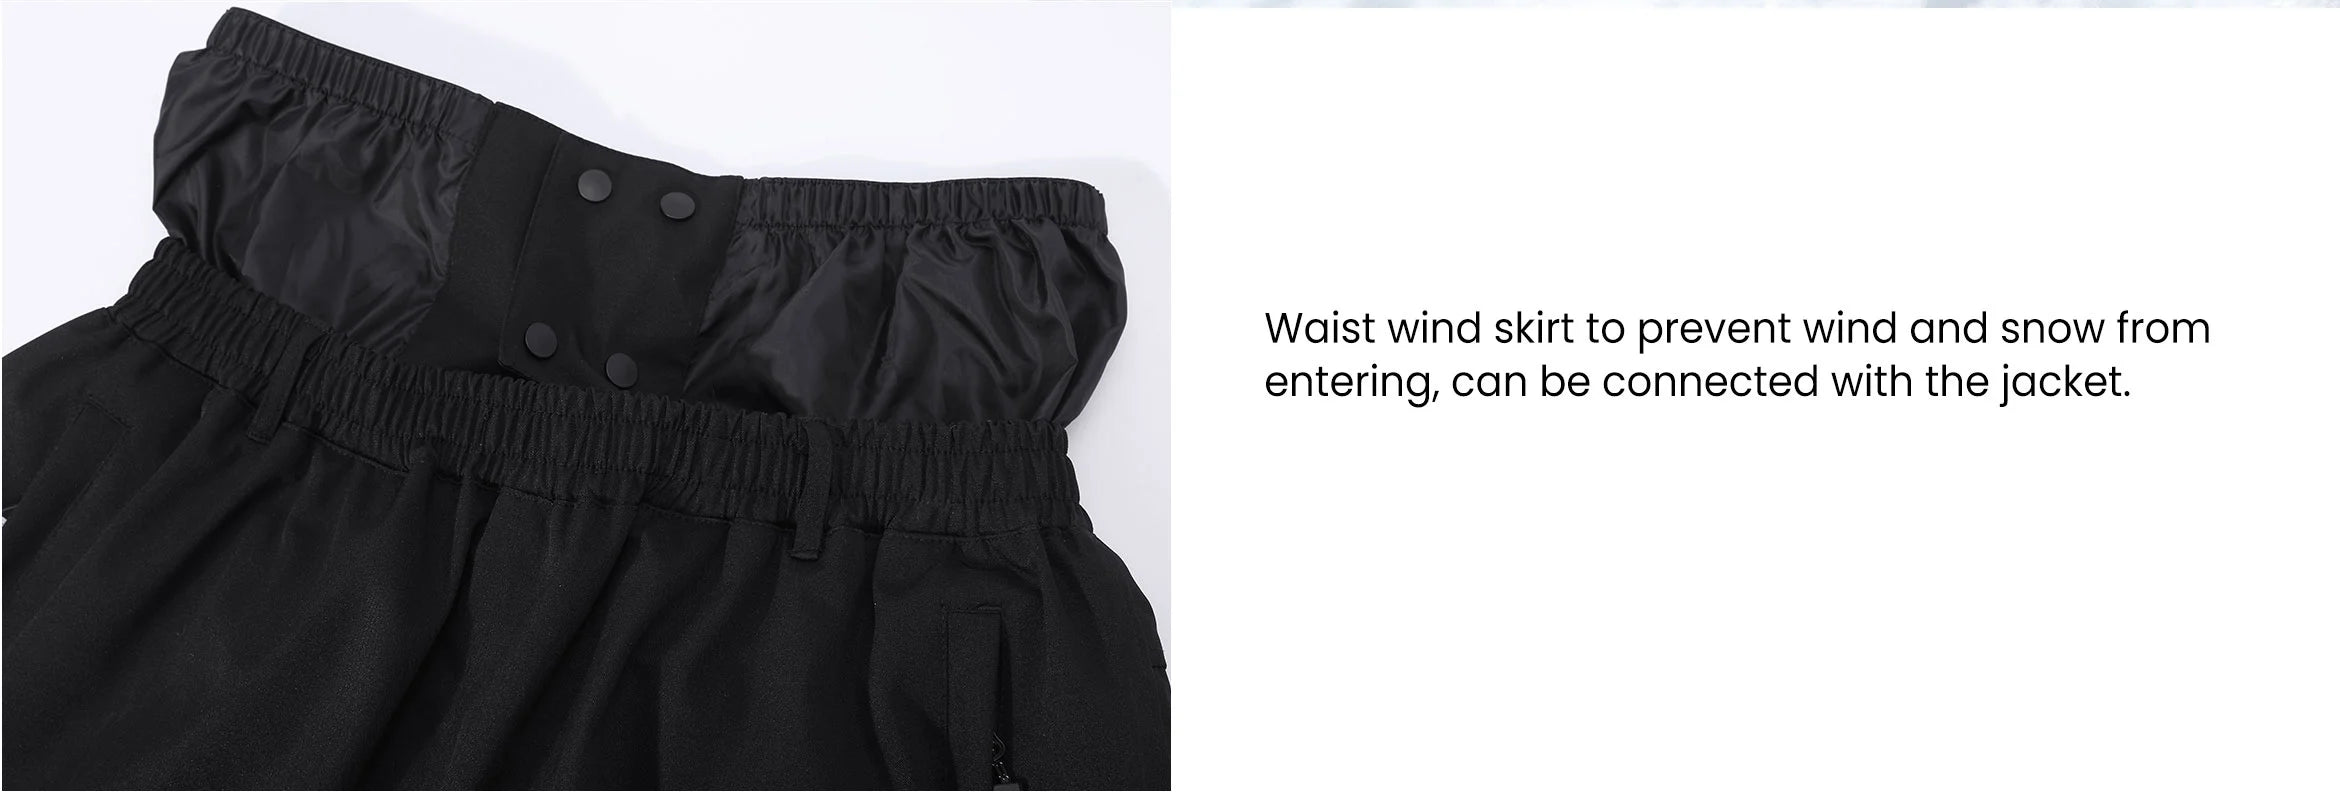 8. Doorek ski suit set - waist wind skirt